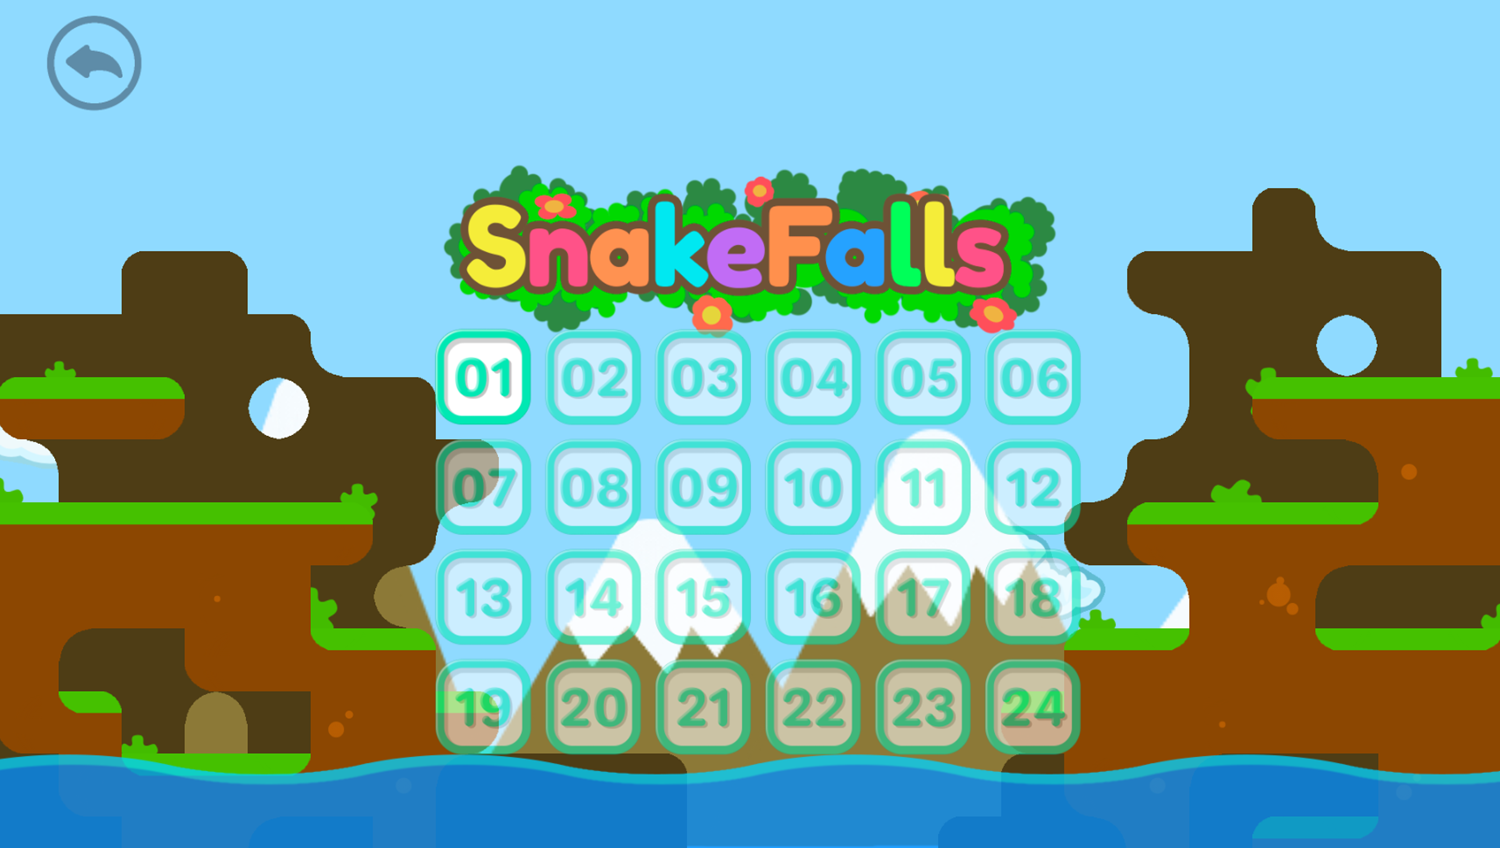 SnakeFalls Game Level Select Screenshot.